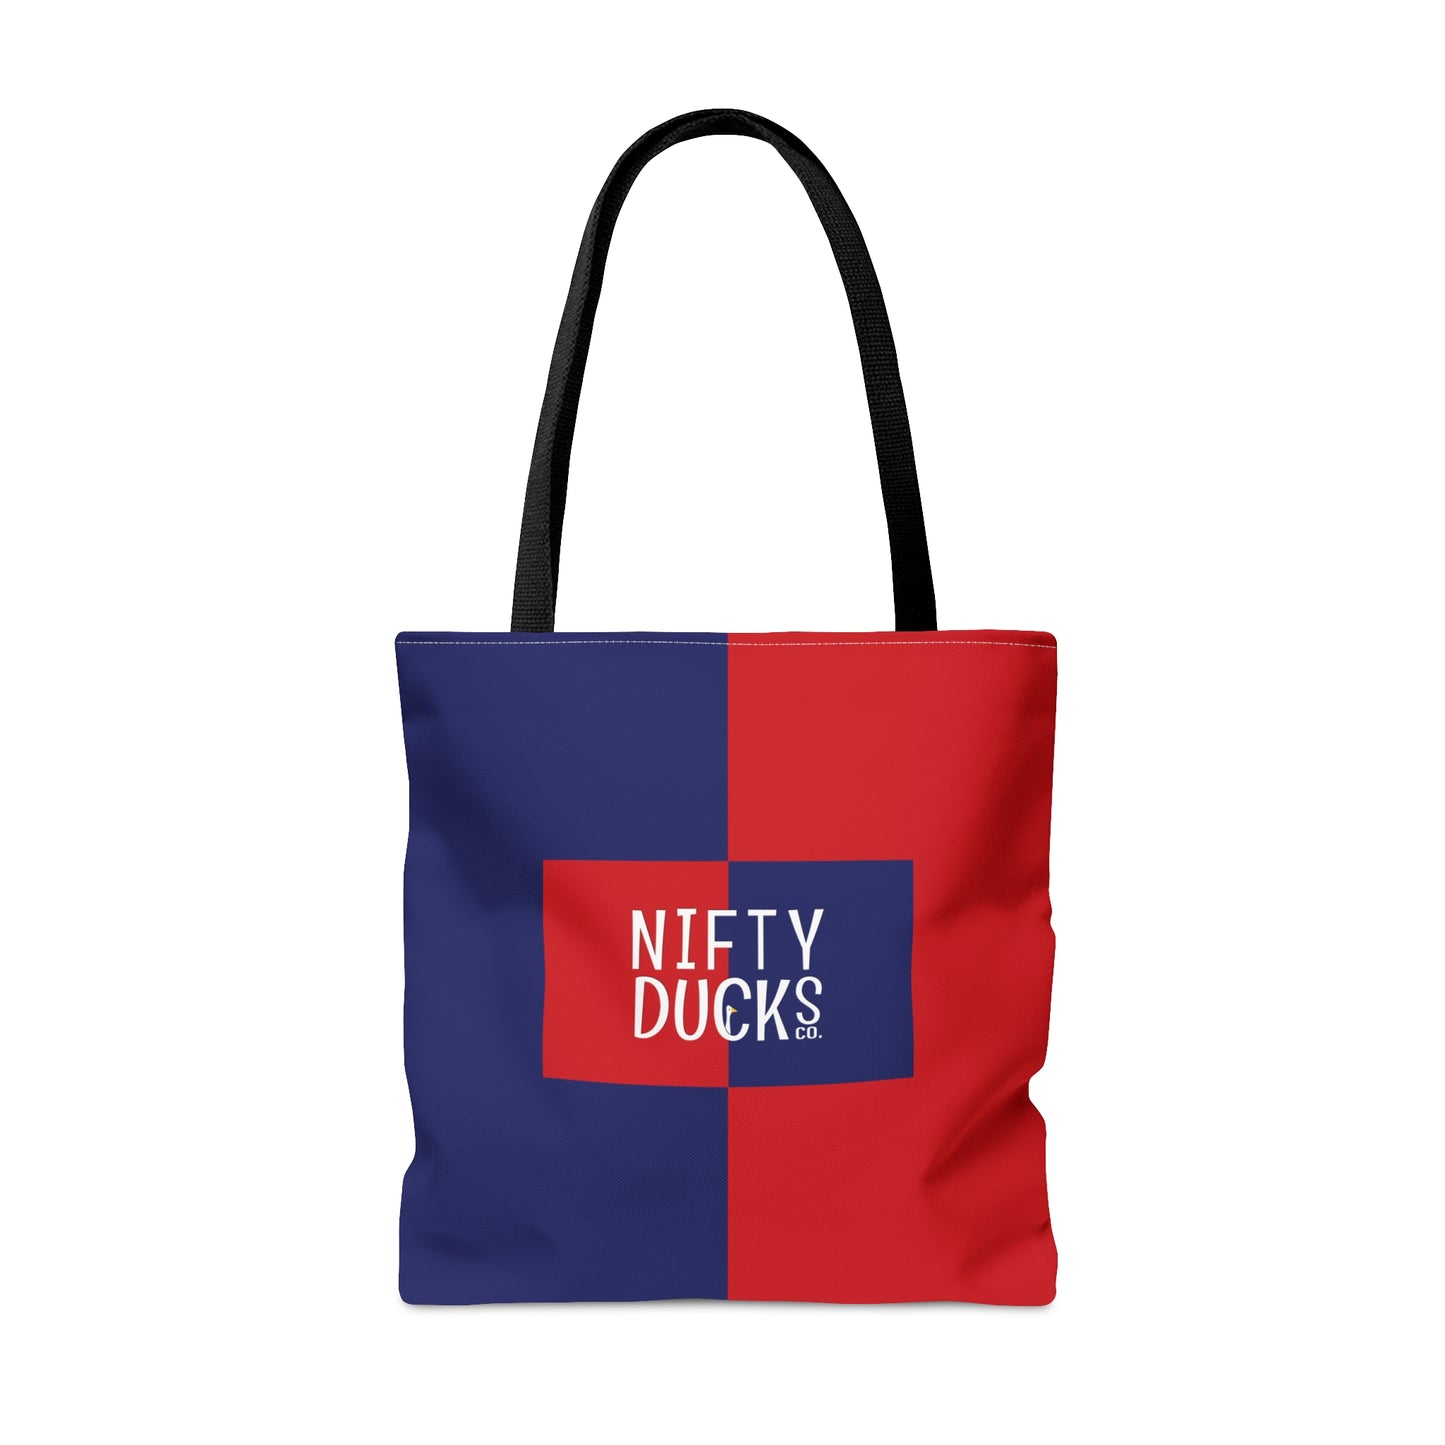 Atlanta - Red White and Blue City series - Logo - Tote Bag